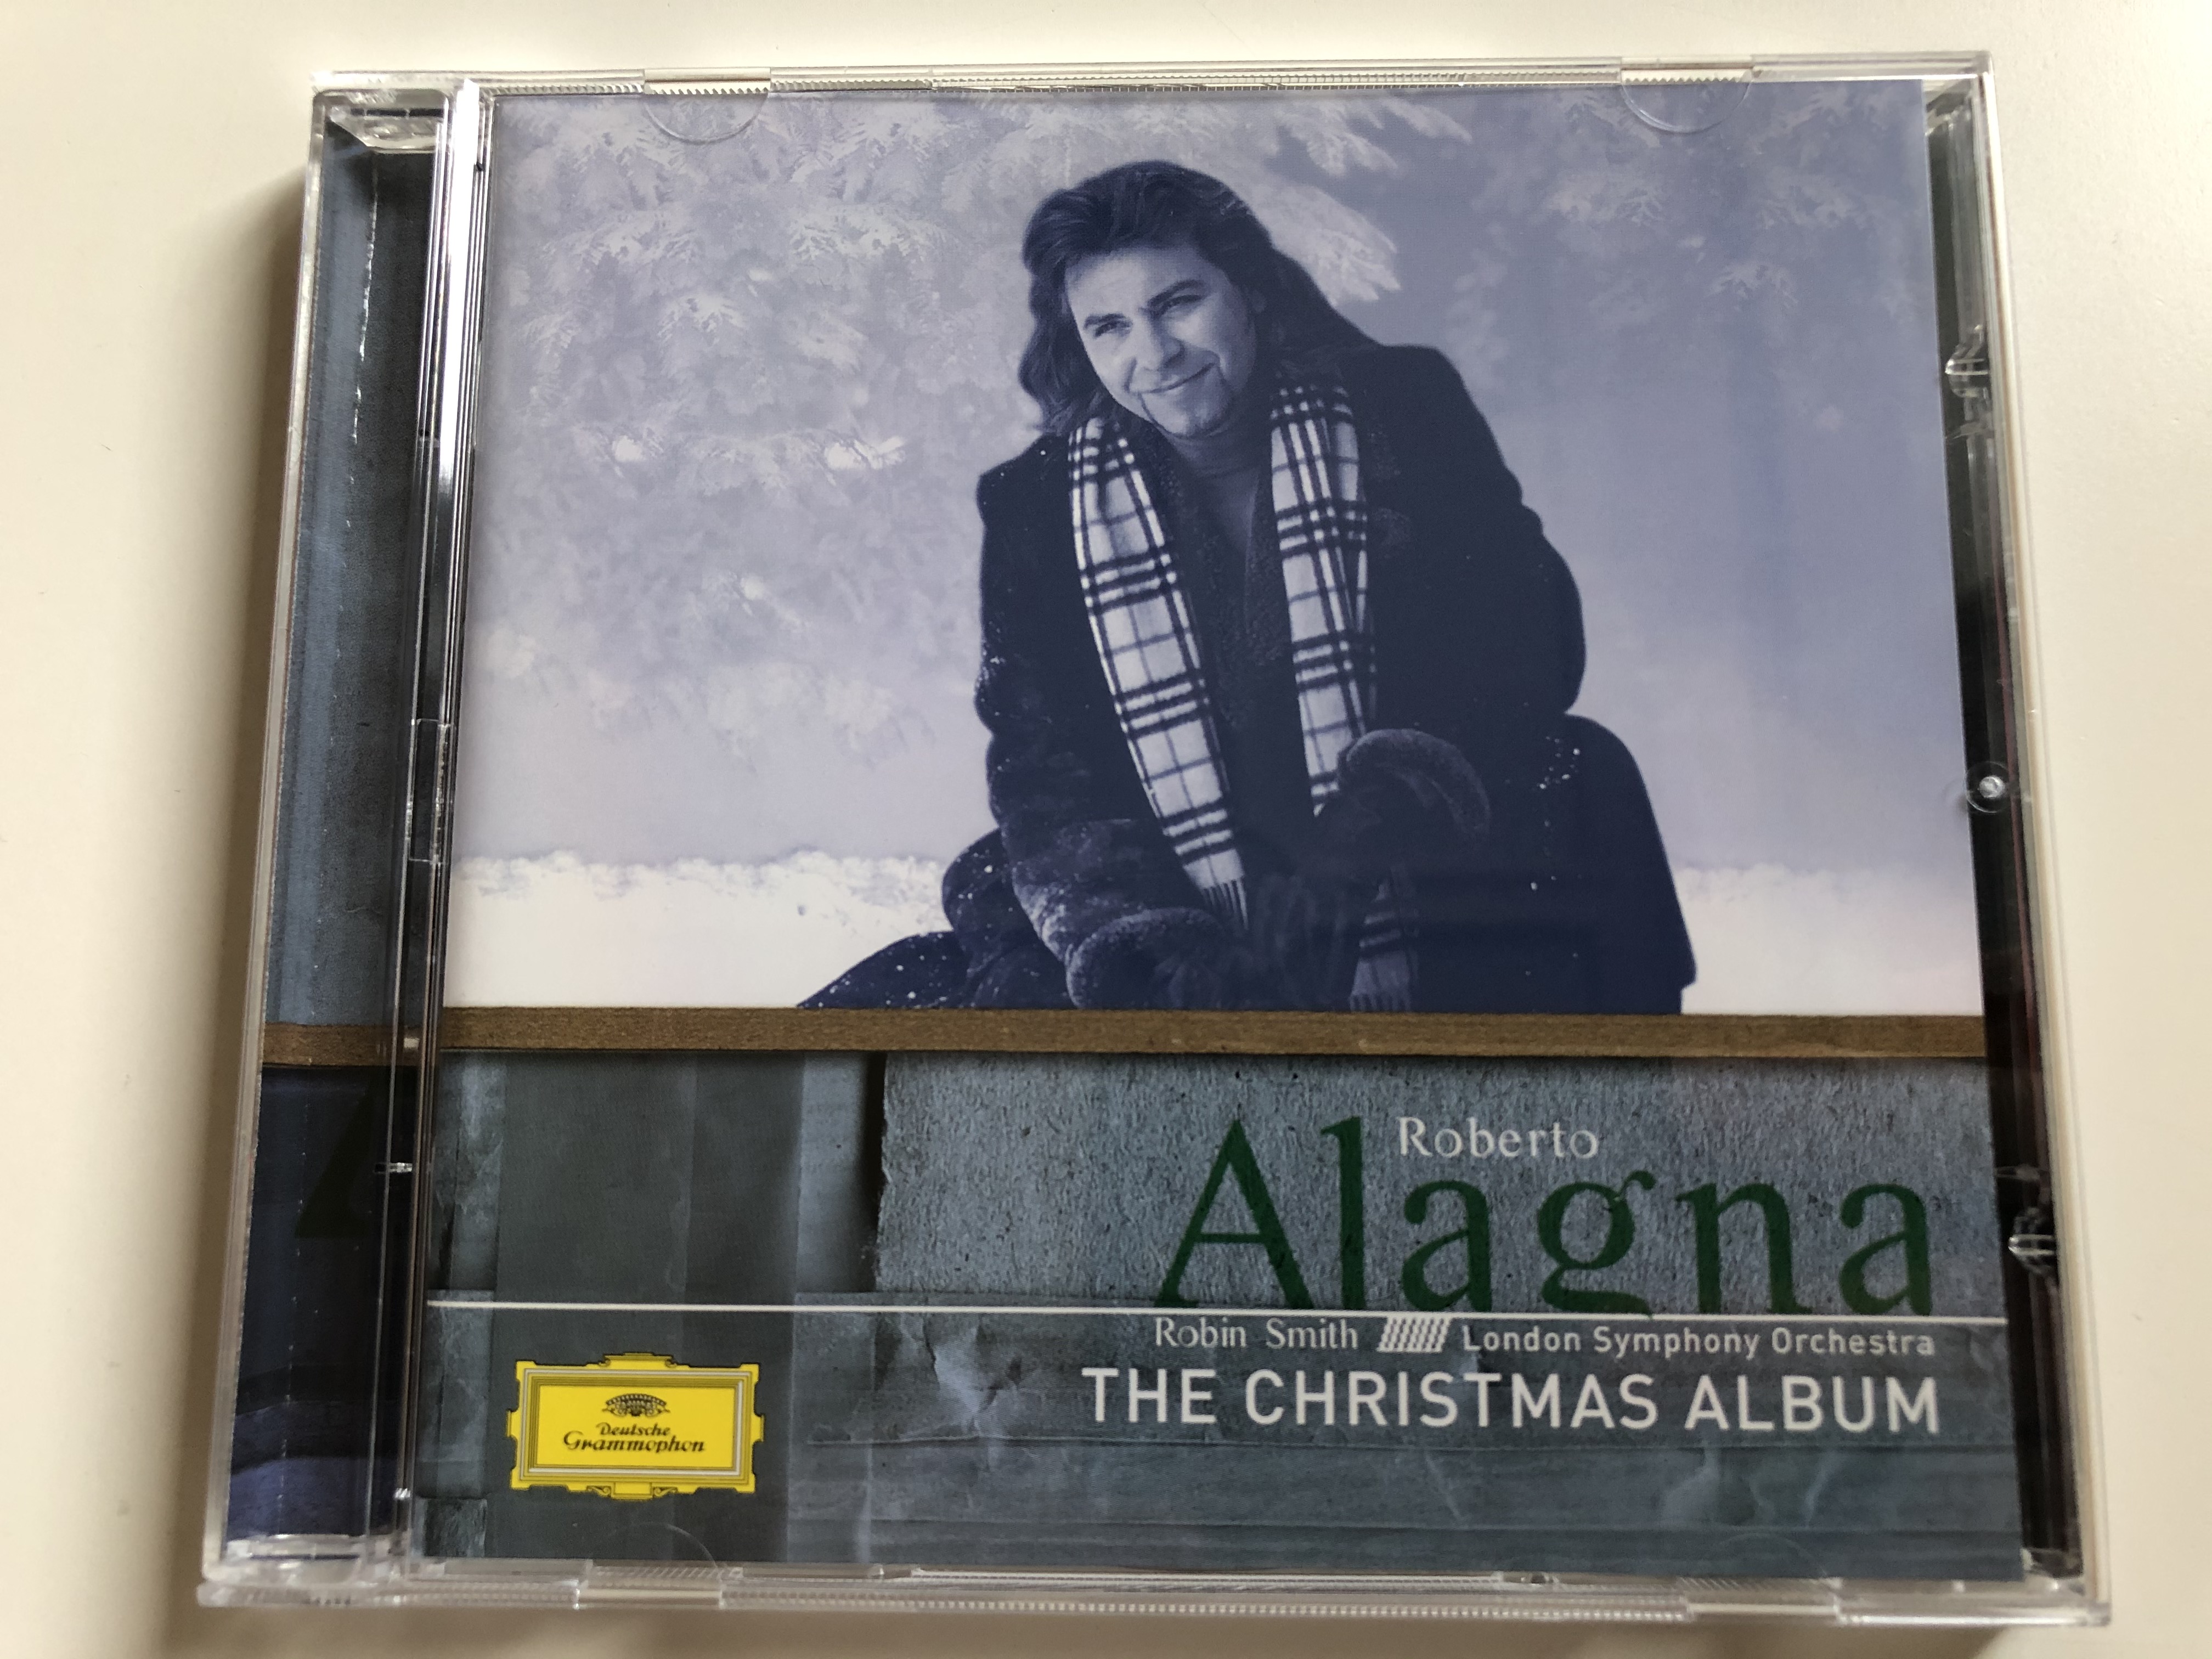 roberto-alagna-the-christmas-album-robin-smith-london-symphony-orchestra-deutsche-grammophon-audio-cd-2006-00289-477-6281-1-.jpg